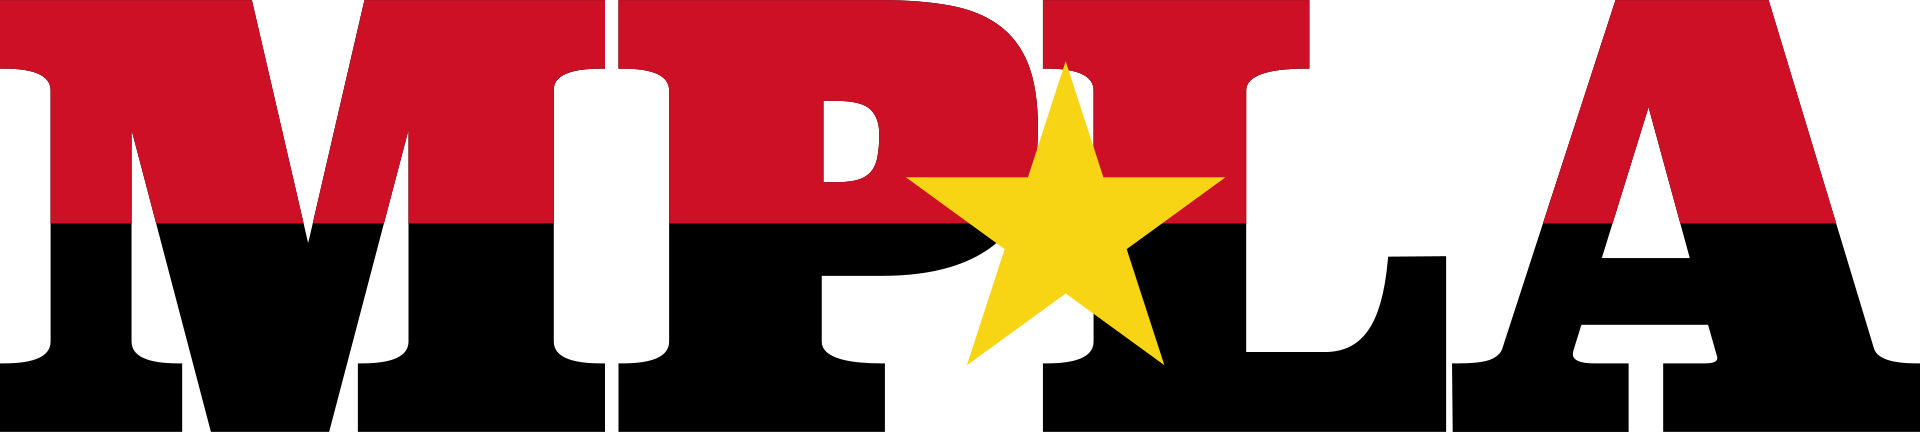 Logo of the MPLA (Angola).svg.png